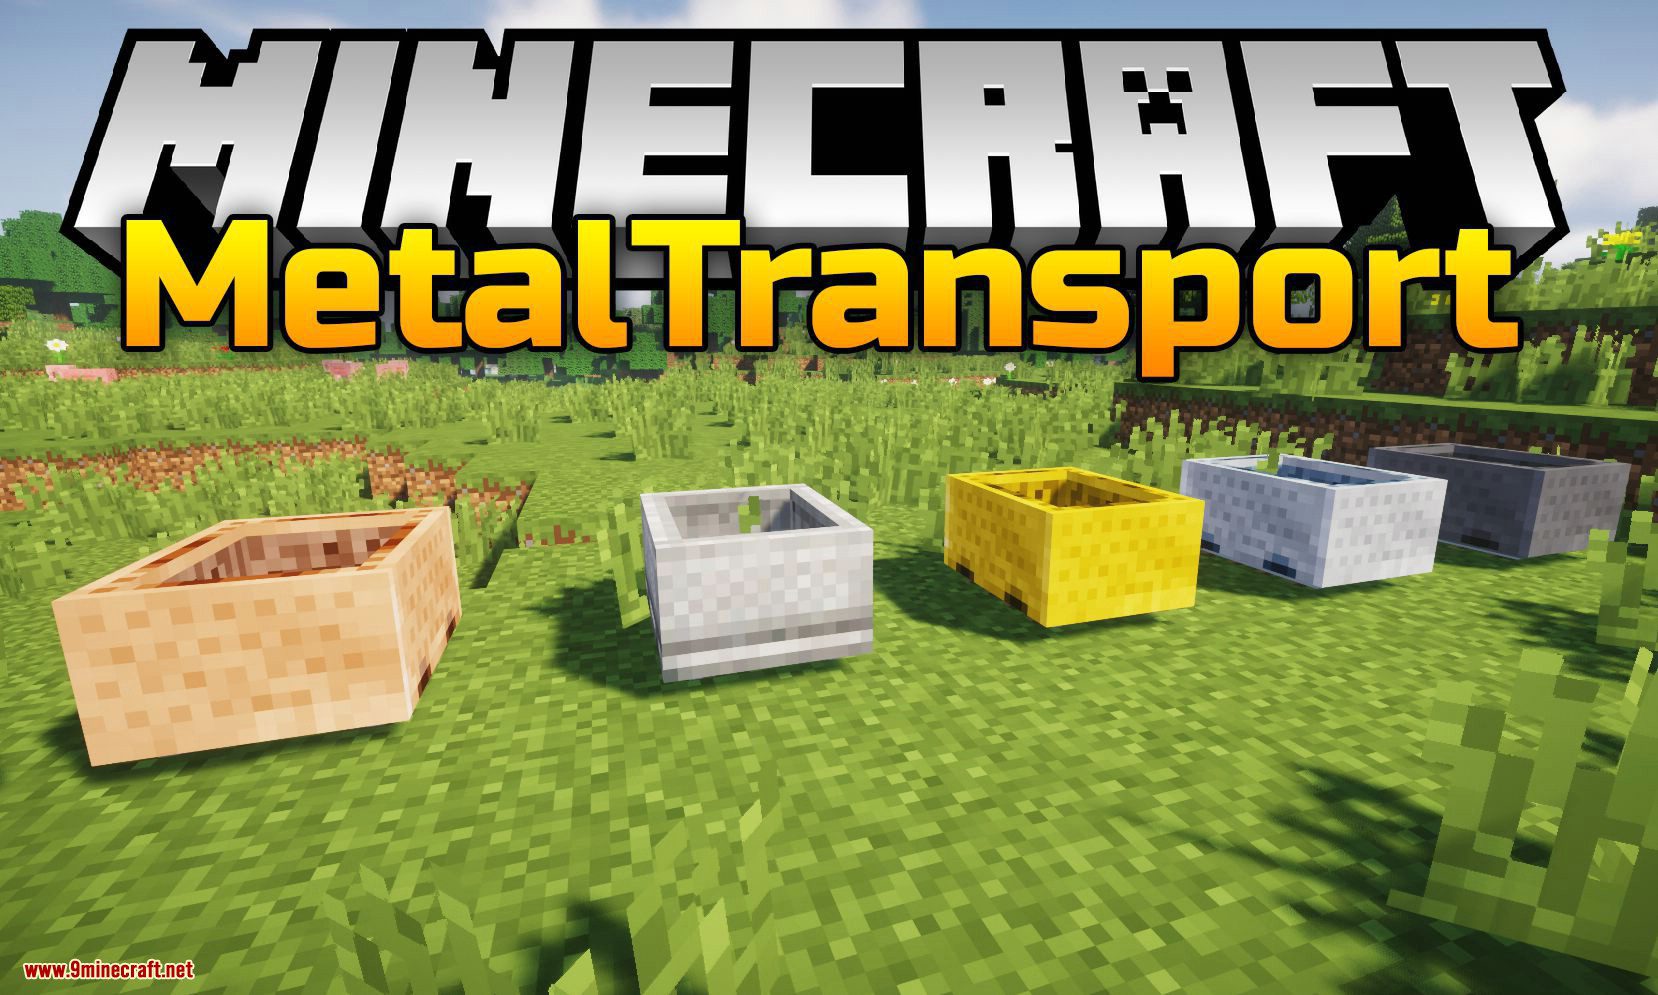 MetalTransport mod for minecraft logo